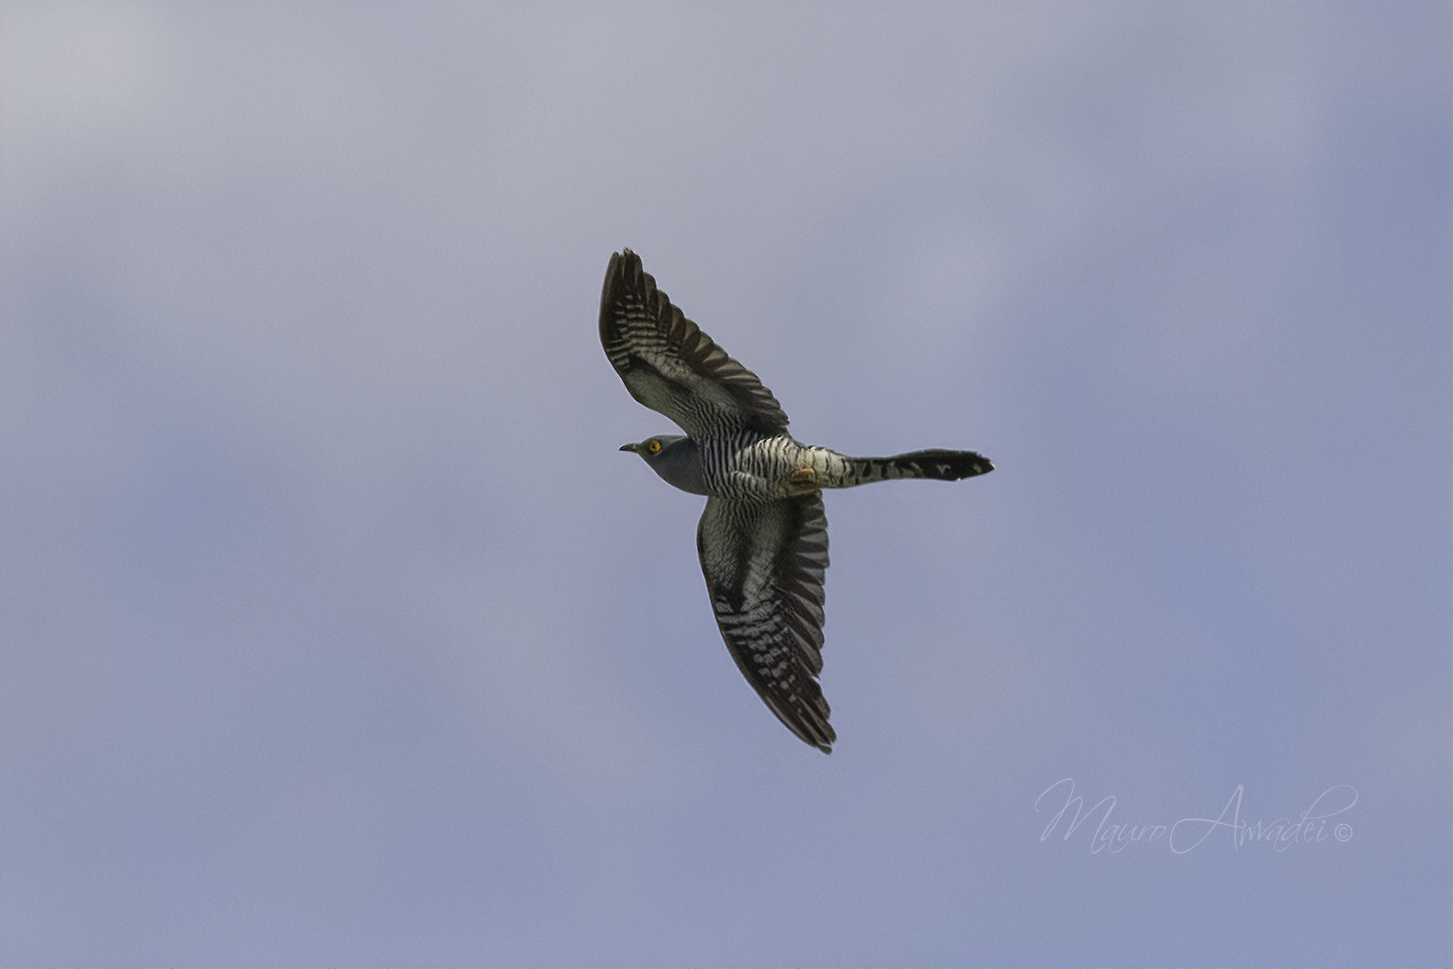 Cuckoo flying on the Tiber...